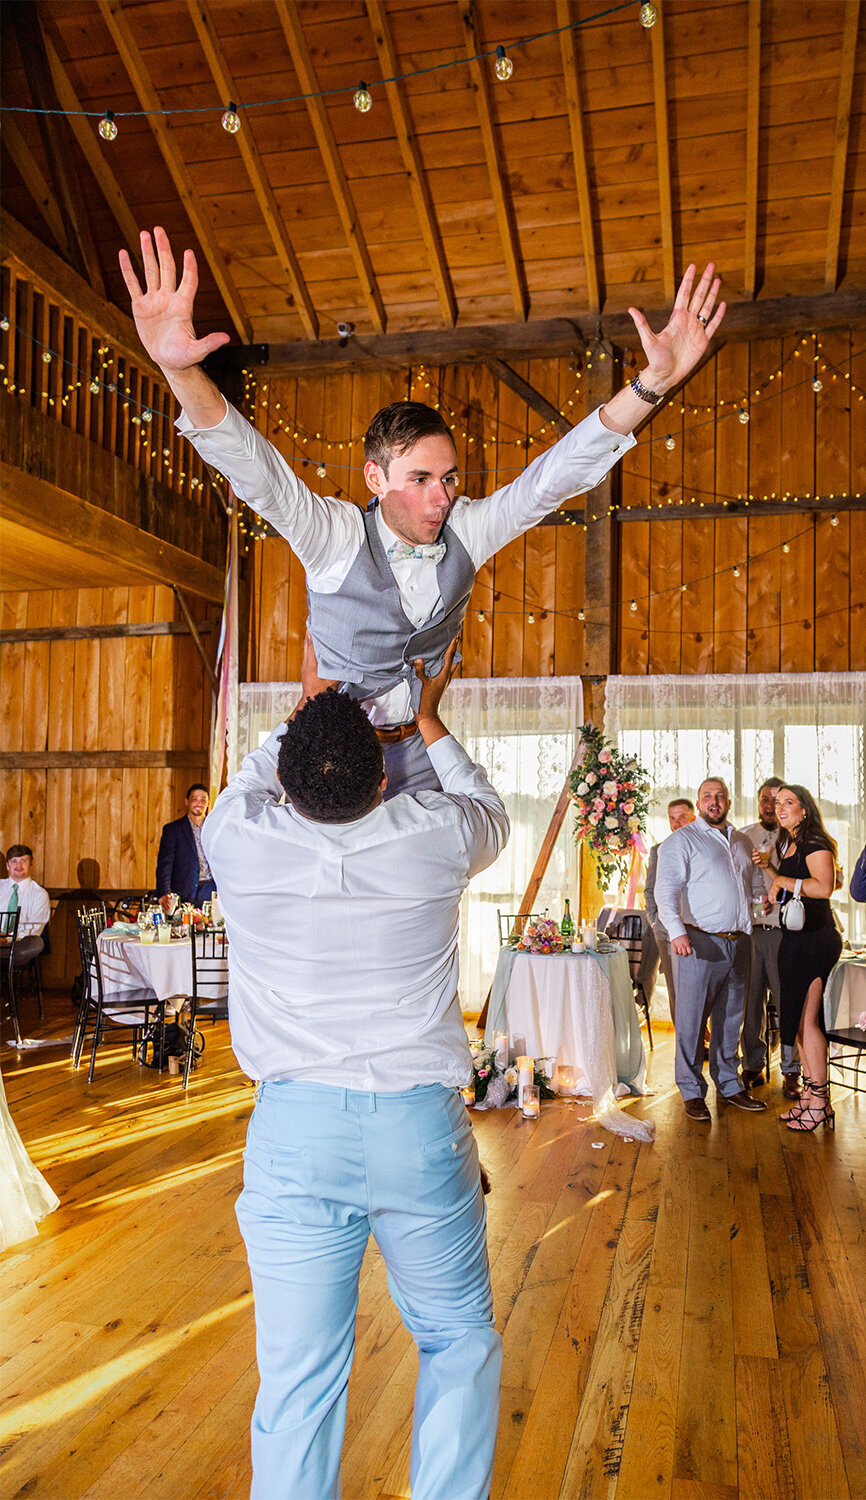 West-Virginia-Barn-Wedding-Reception-Dancing